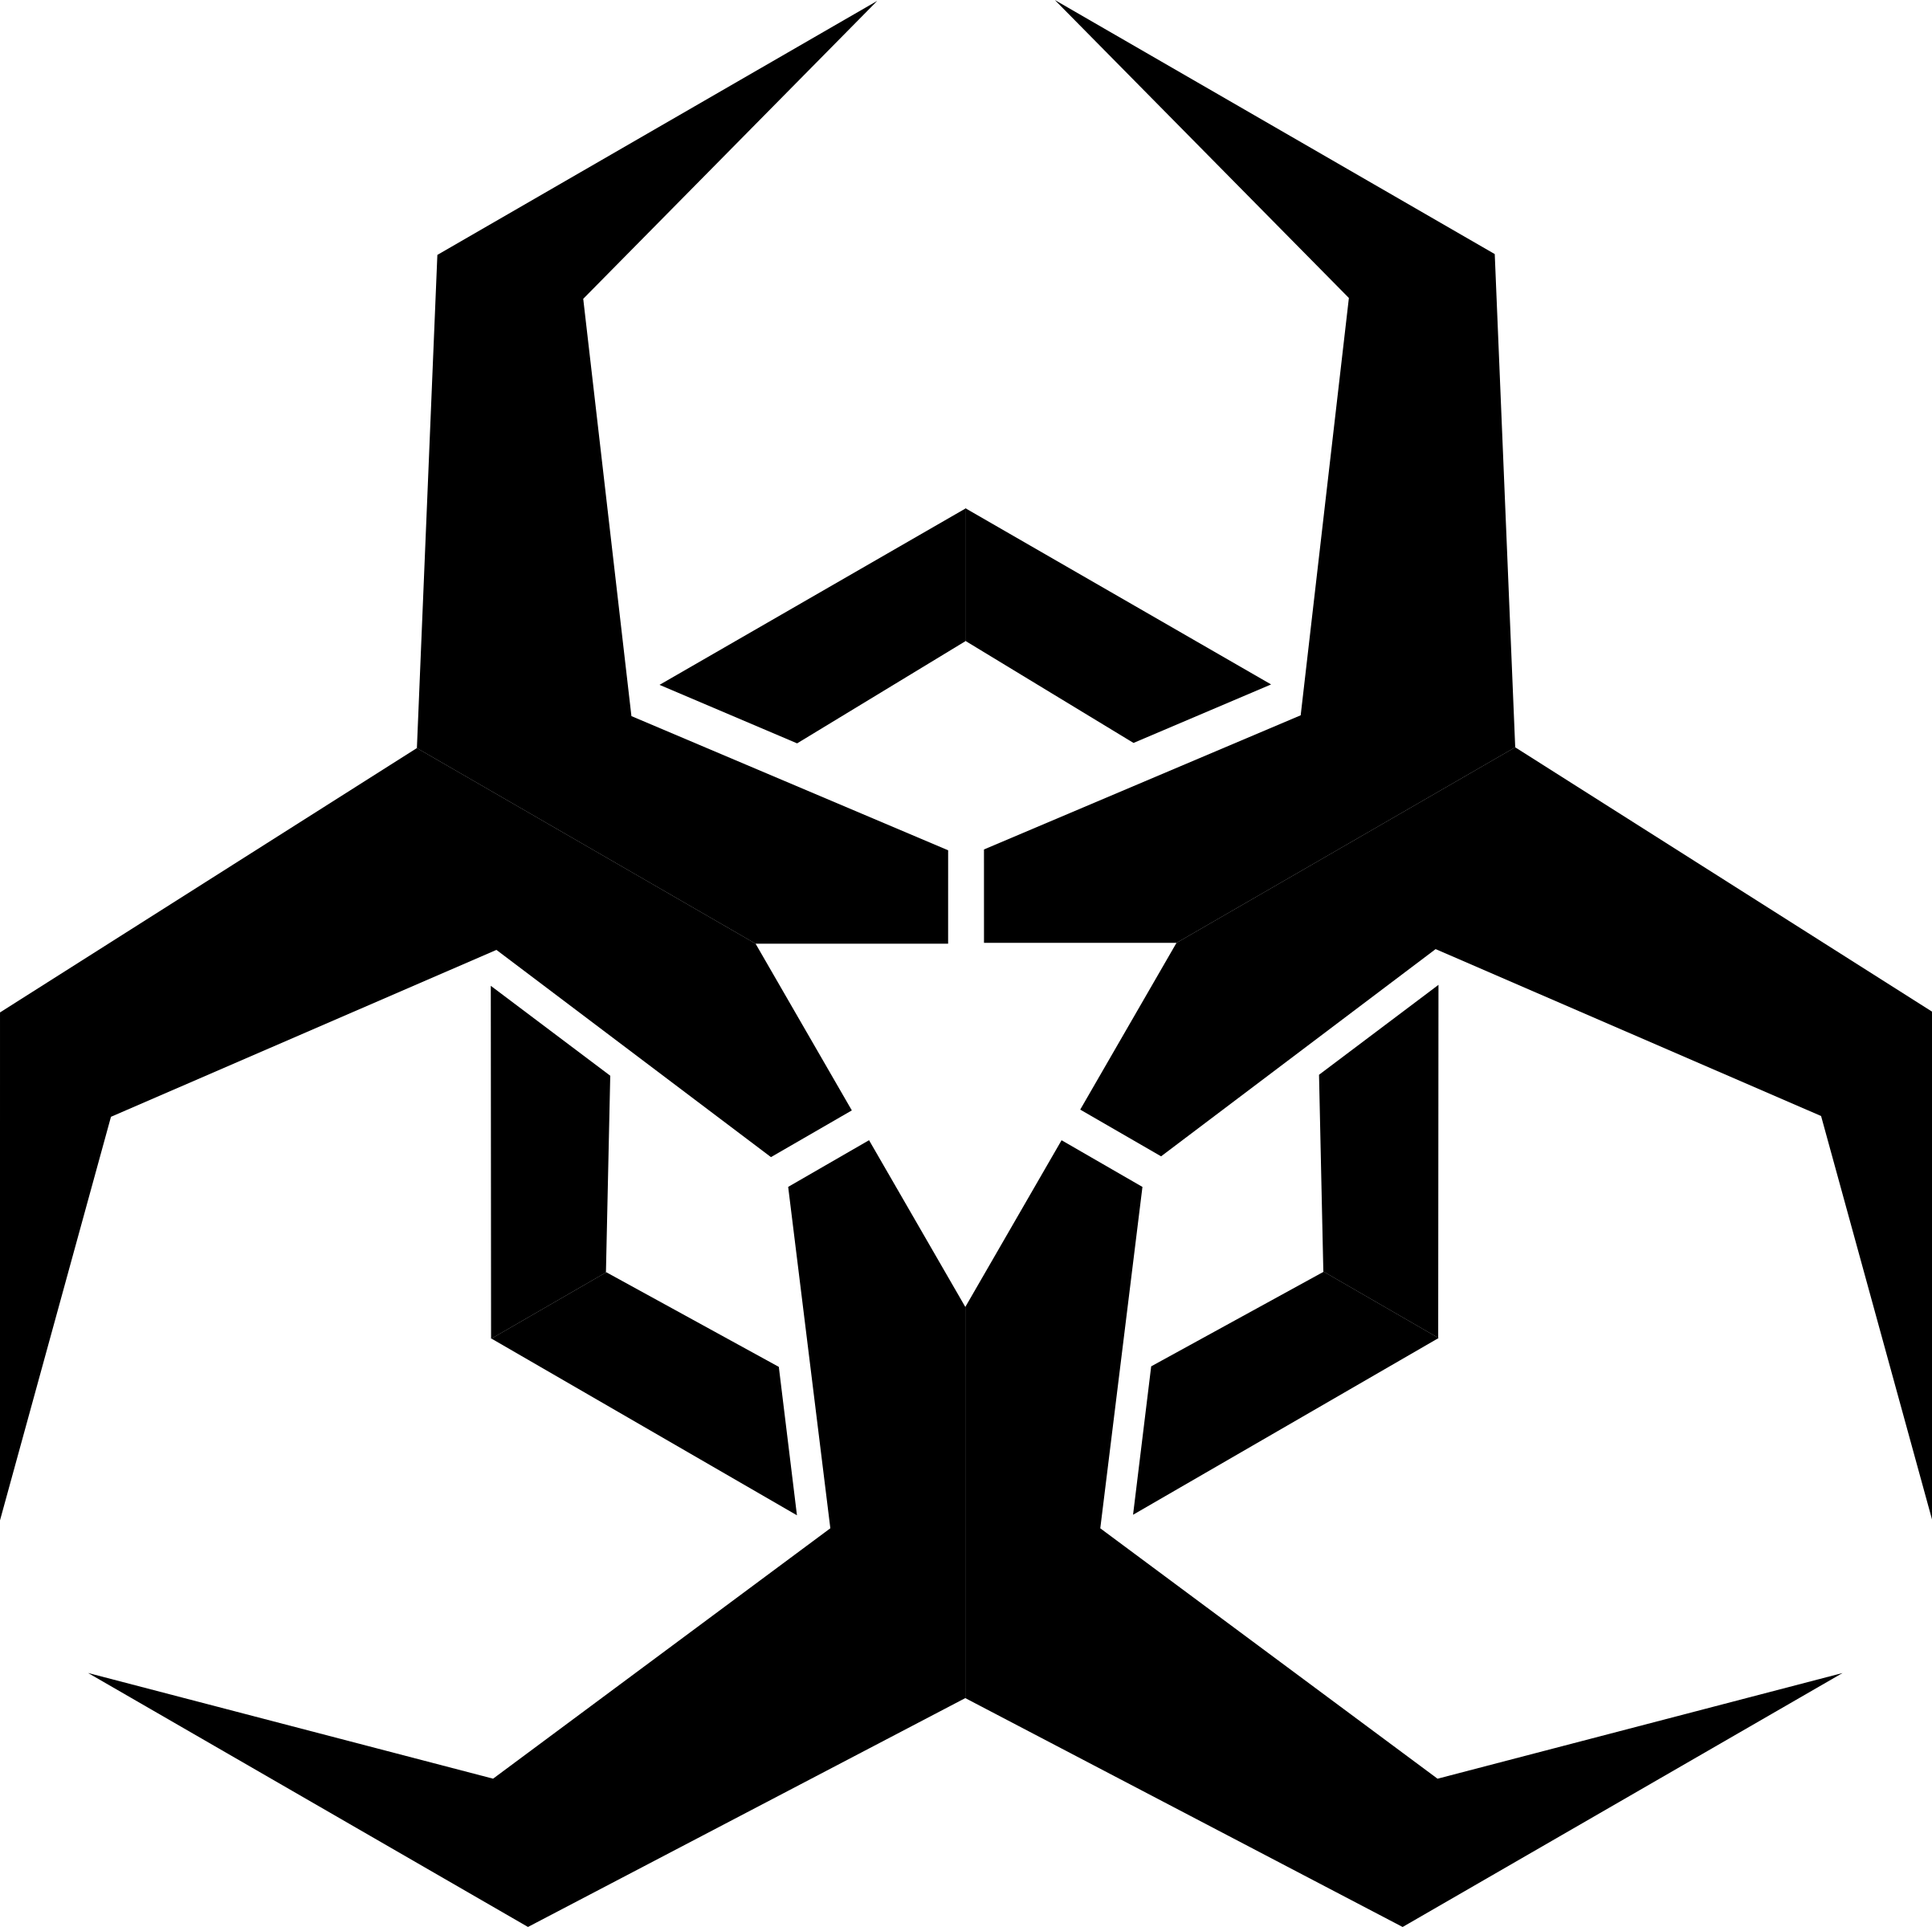 Cool Biohazard Symbol logo PNG Immagine Trasparente